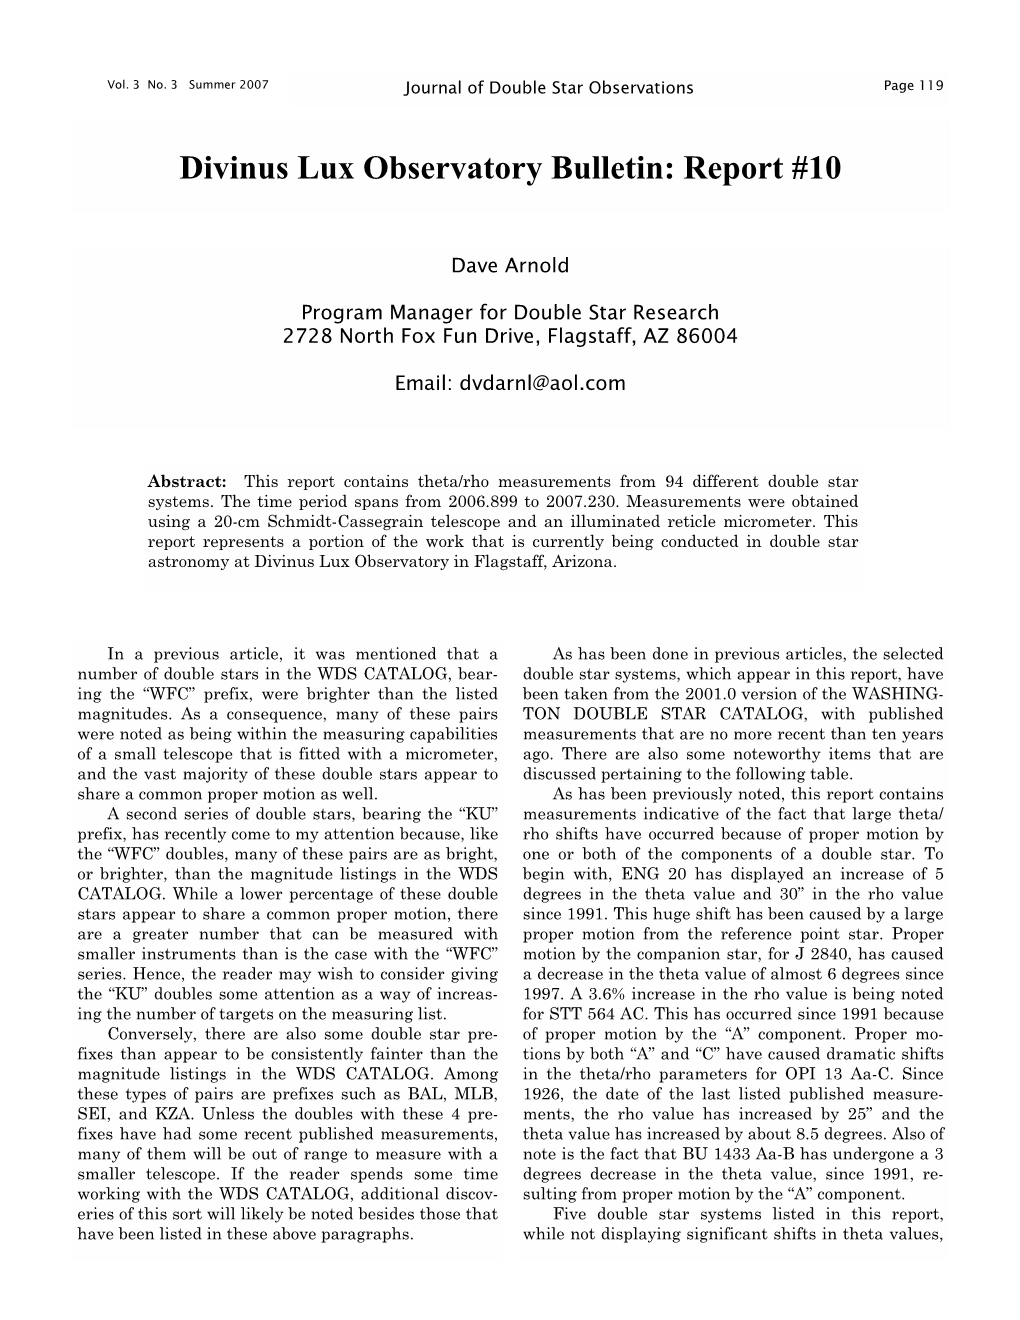 Divinus Lux Observatory Bulletin: Report #10